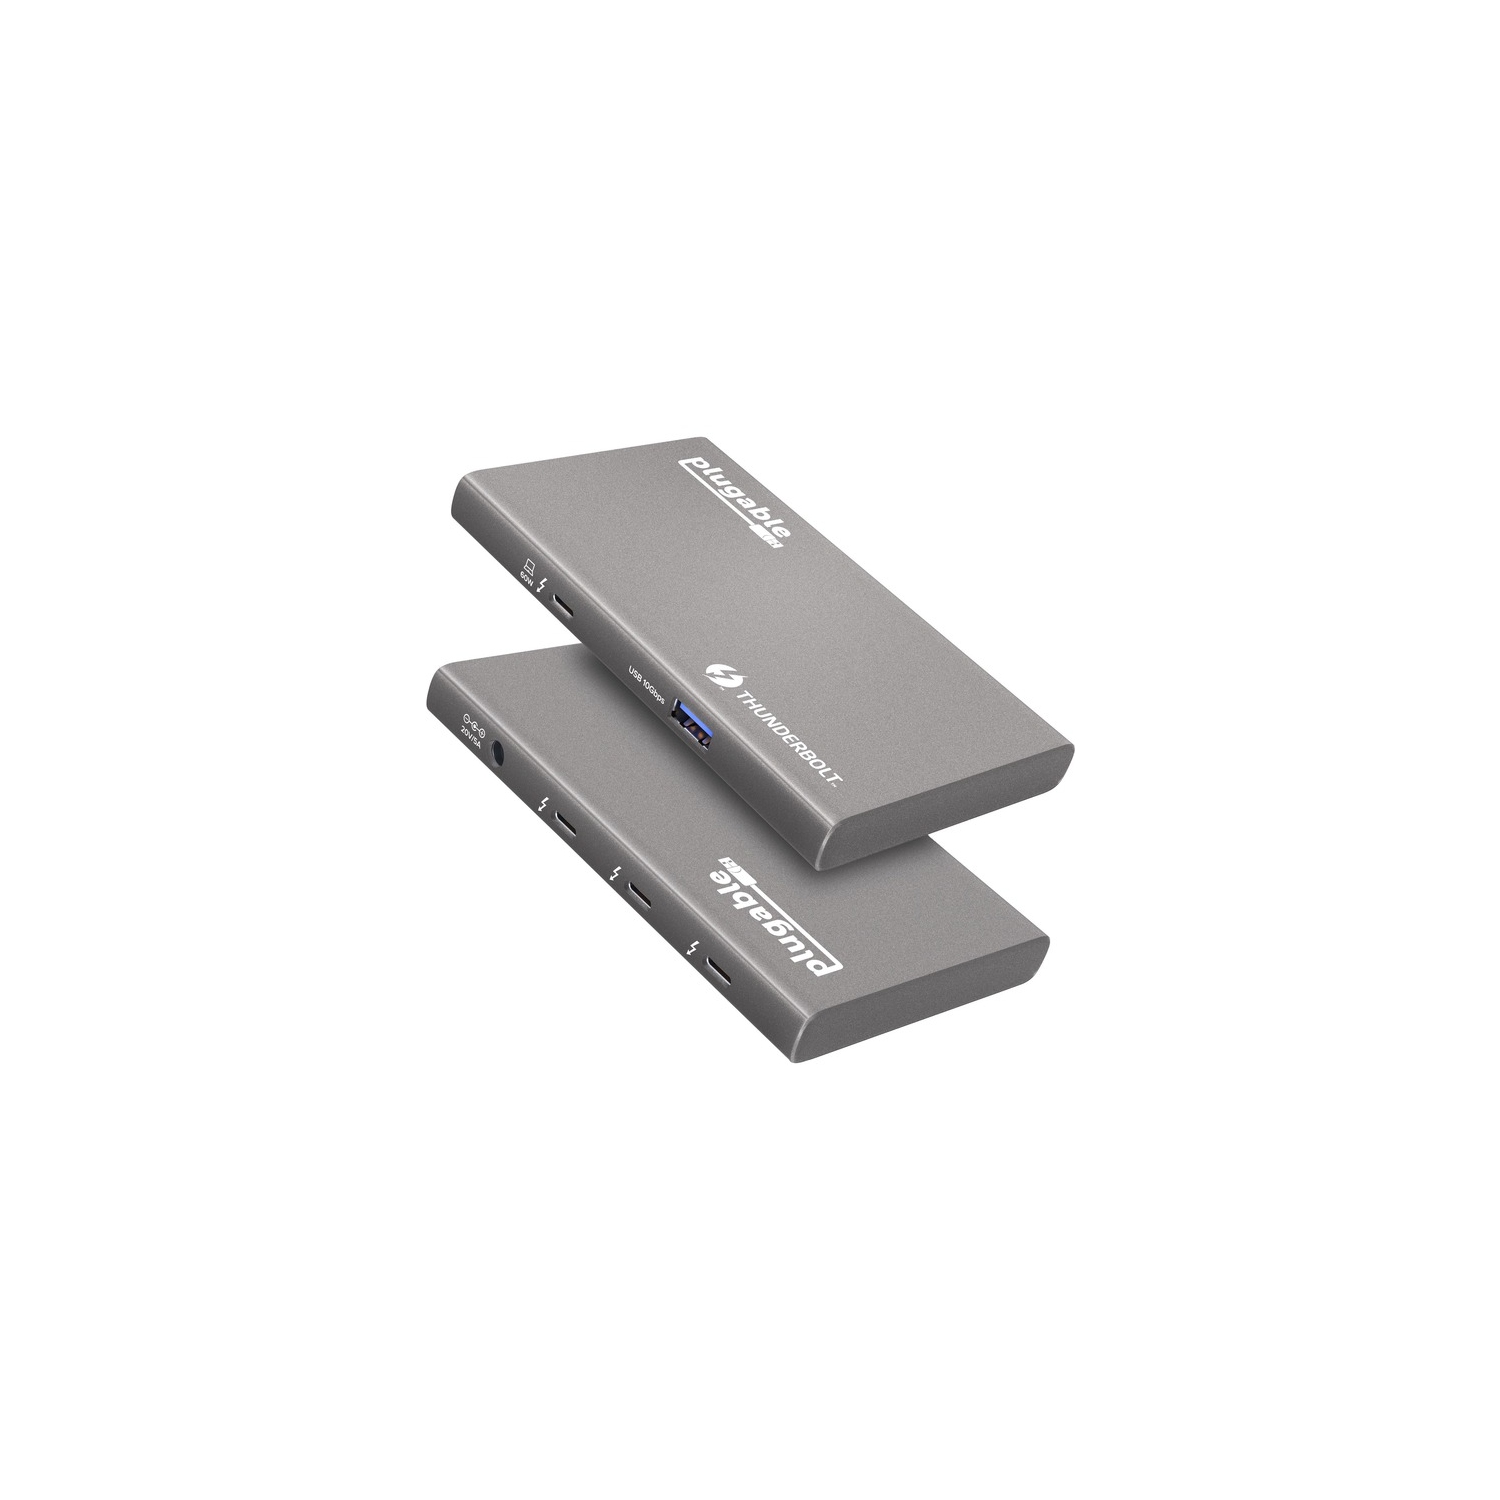 Plugable Small, Fast, and Incredibly Reliable Plugable USB4 Hub Debuts at CES USB4-HUB3A